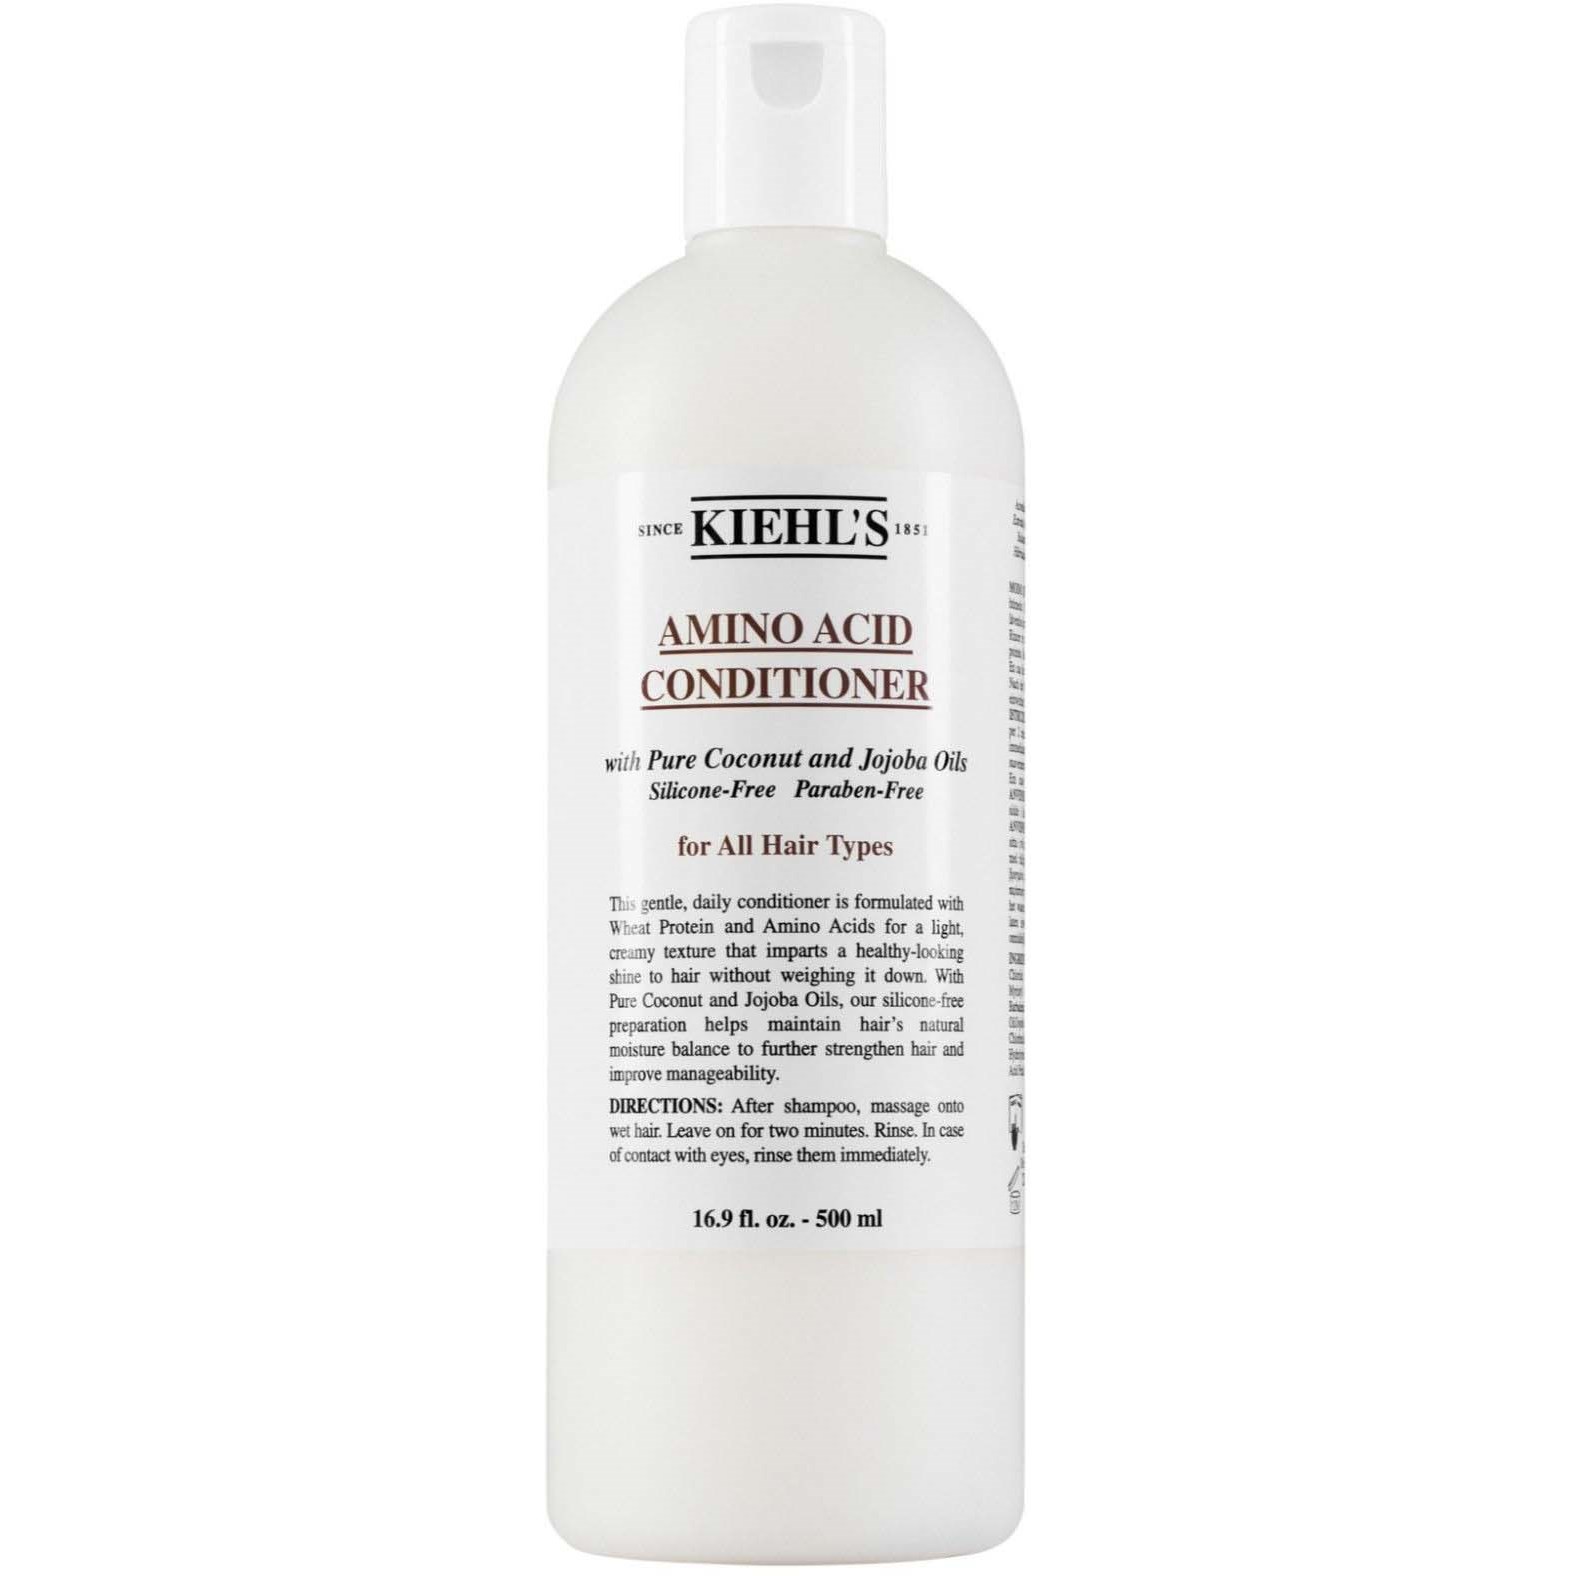 Kiehl's Amino Acid Hair Care Conditioner 500 ml